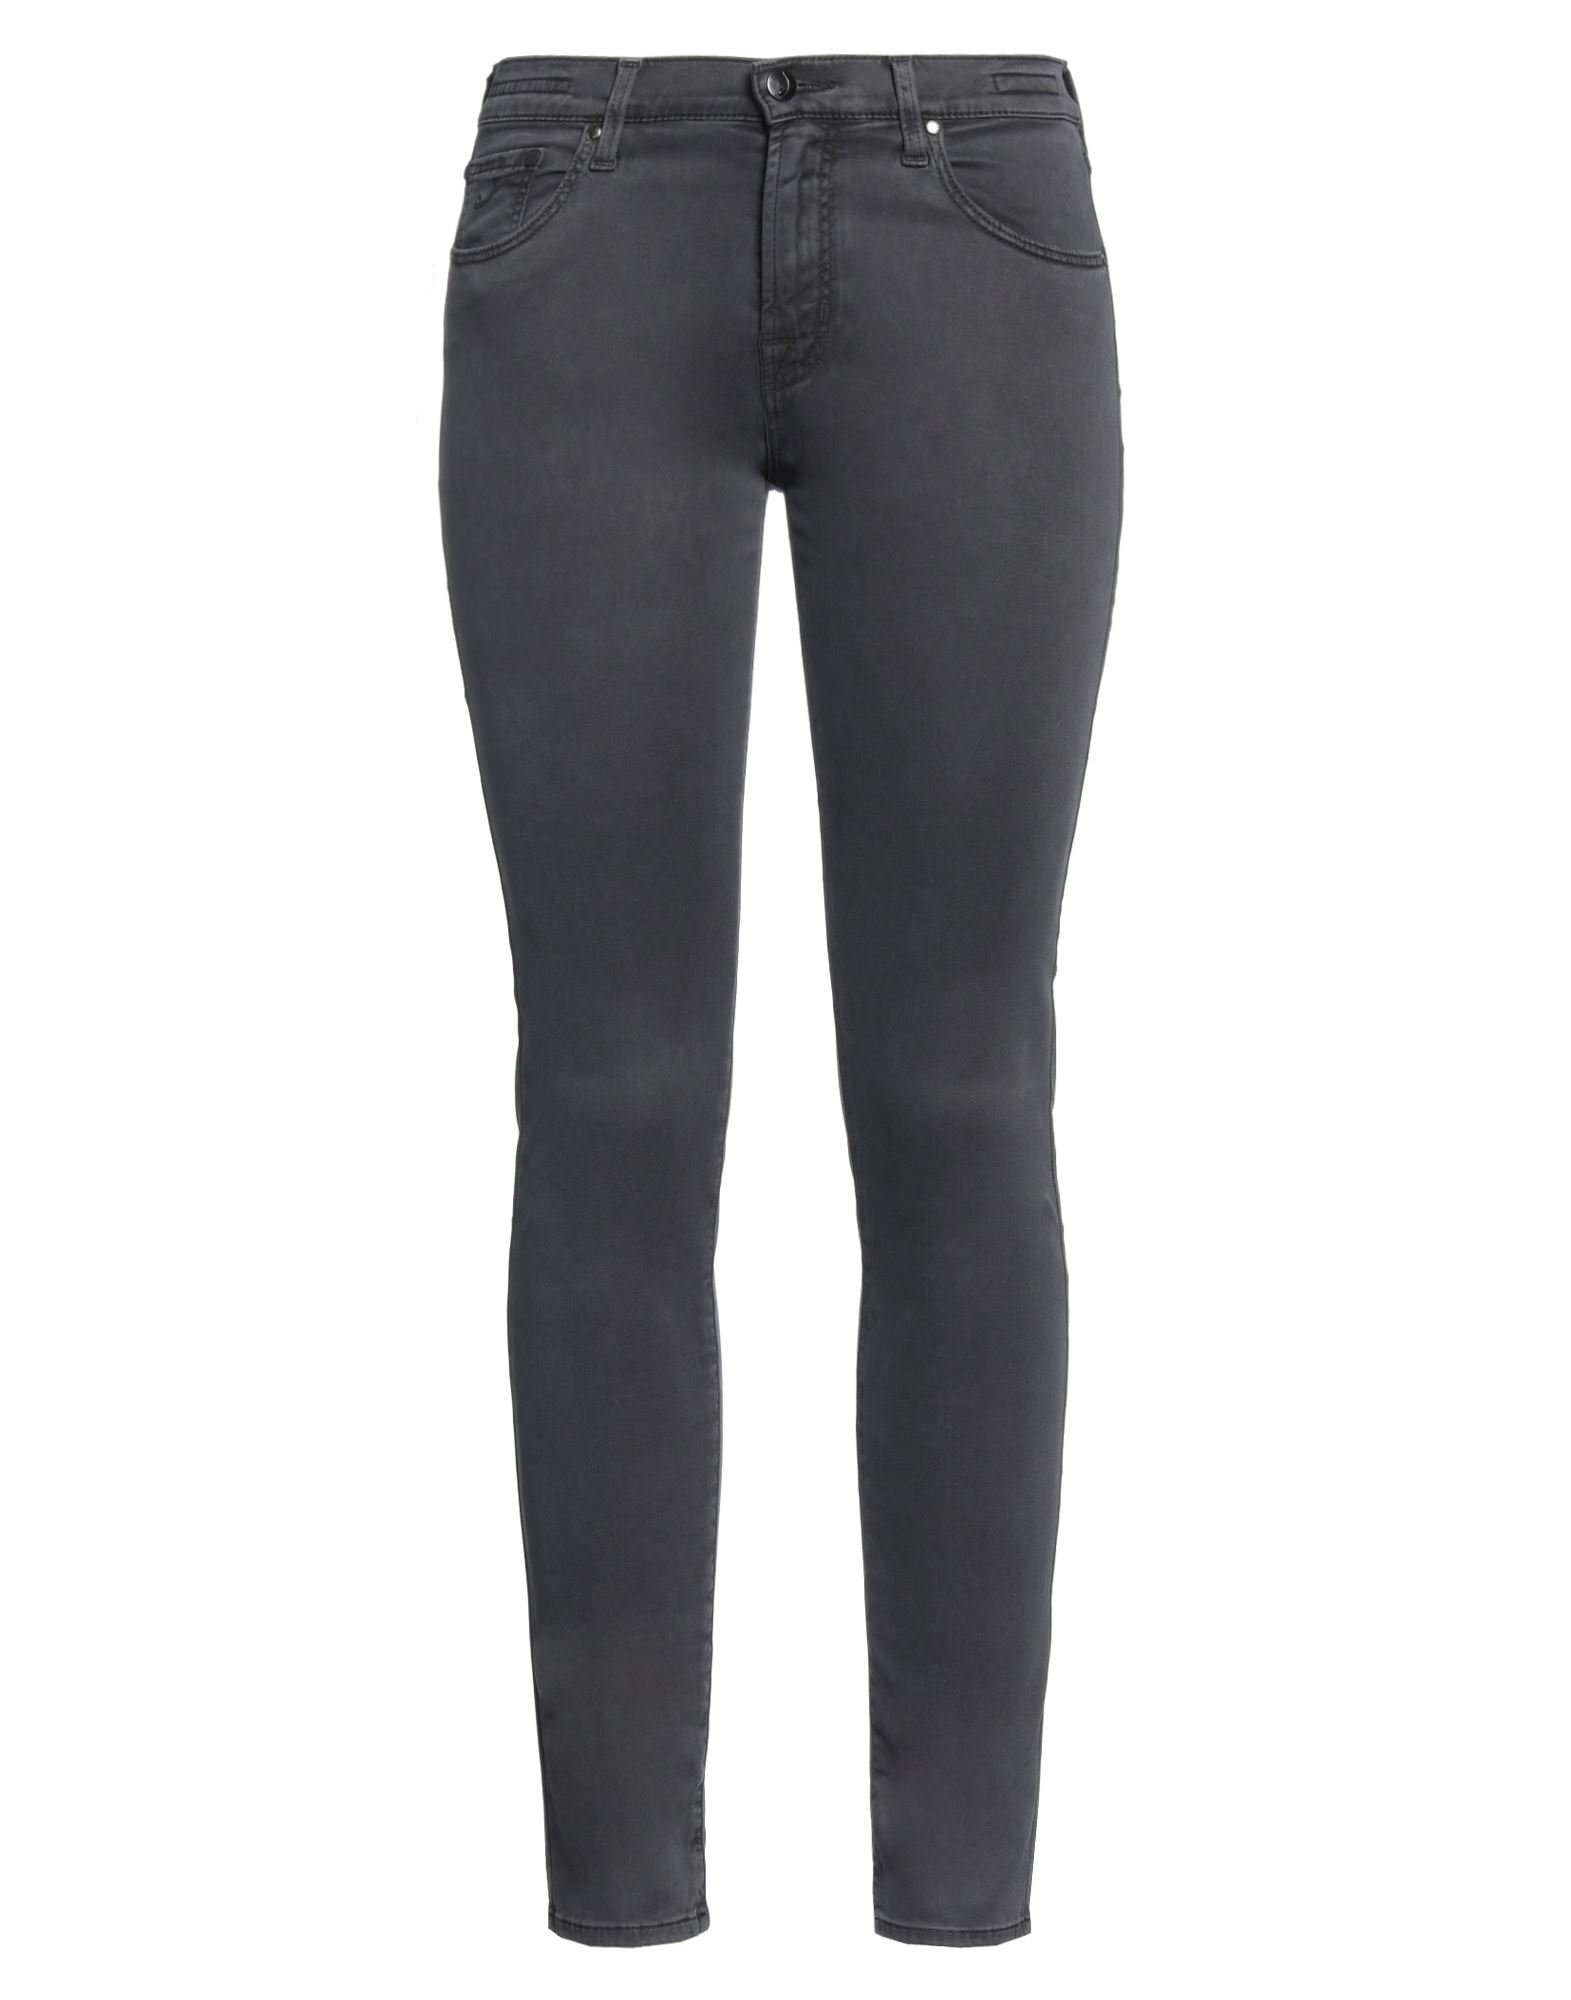 Jacob Cohёn Woman Pants Steel Grey Size 28 Lyocell, Modal, Cotton, Elastomultiester, Elastane